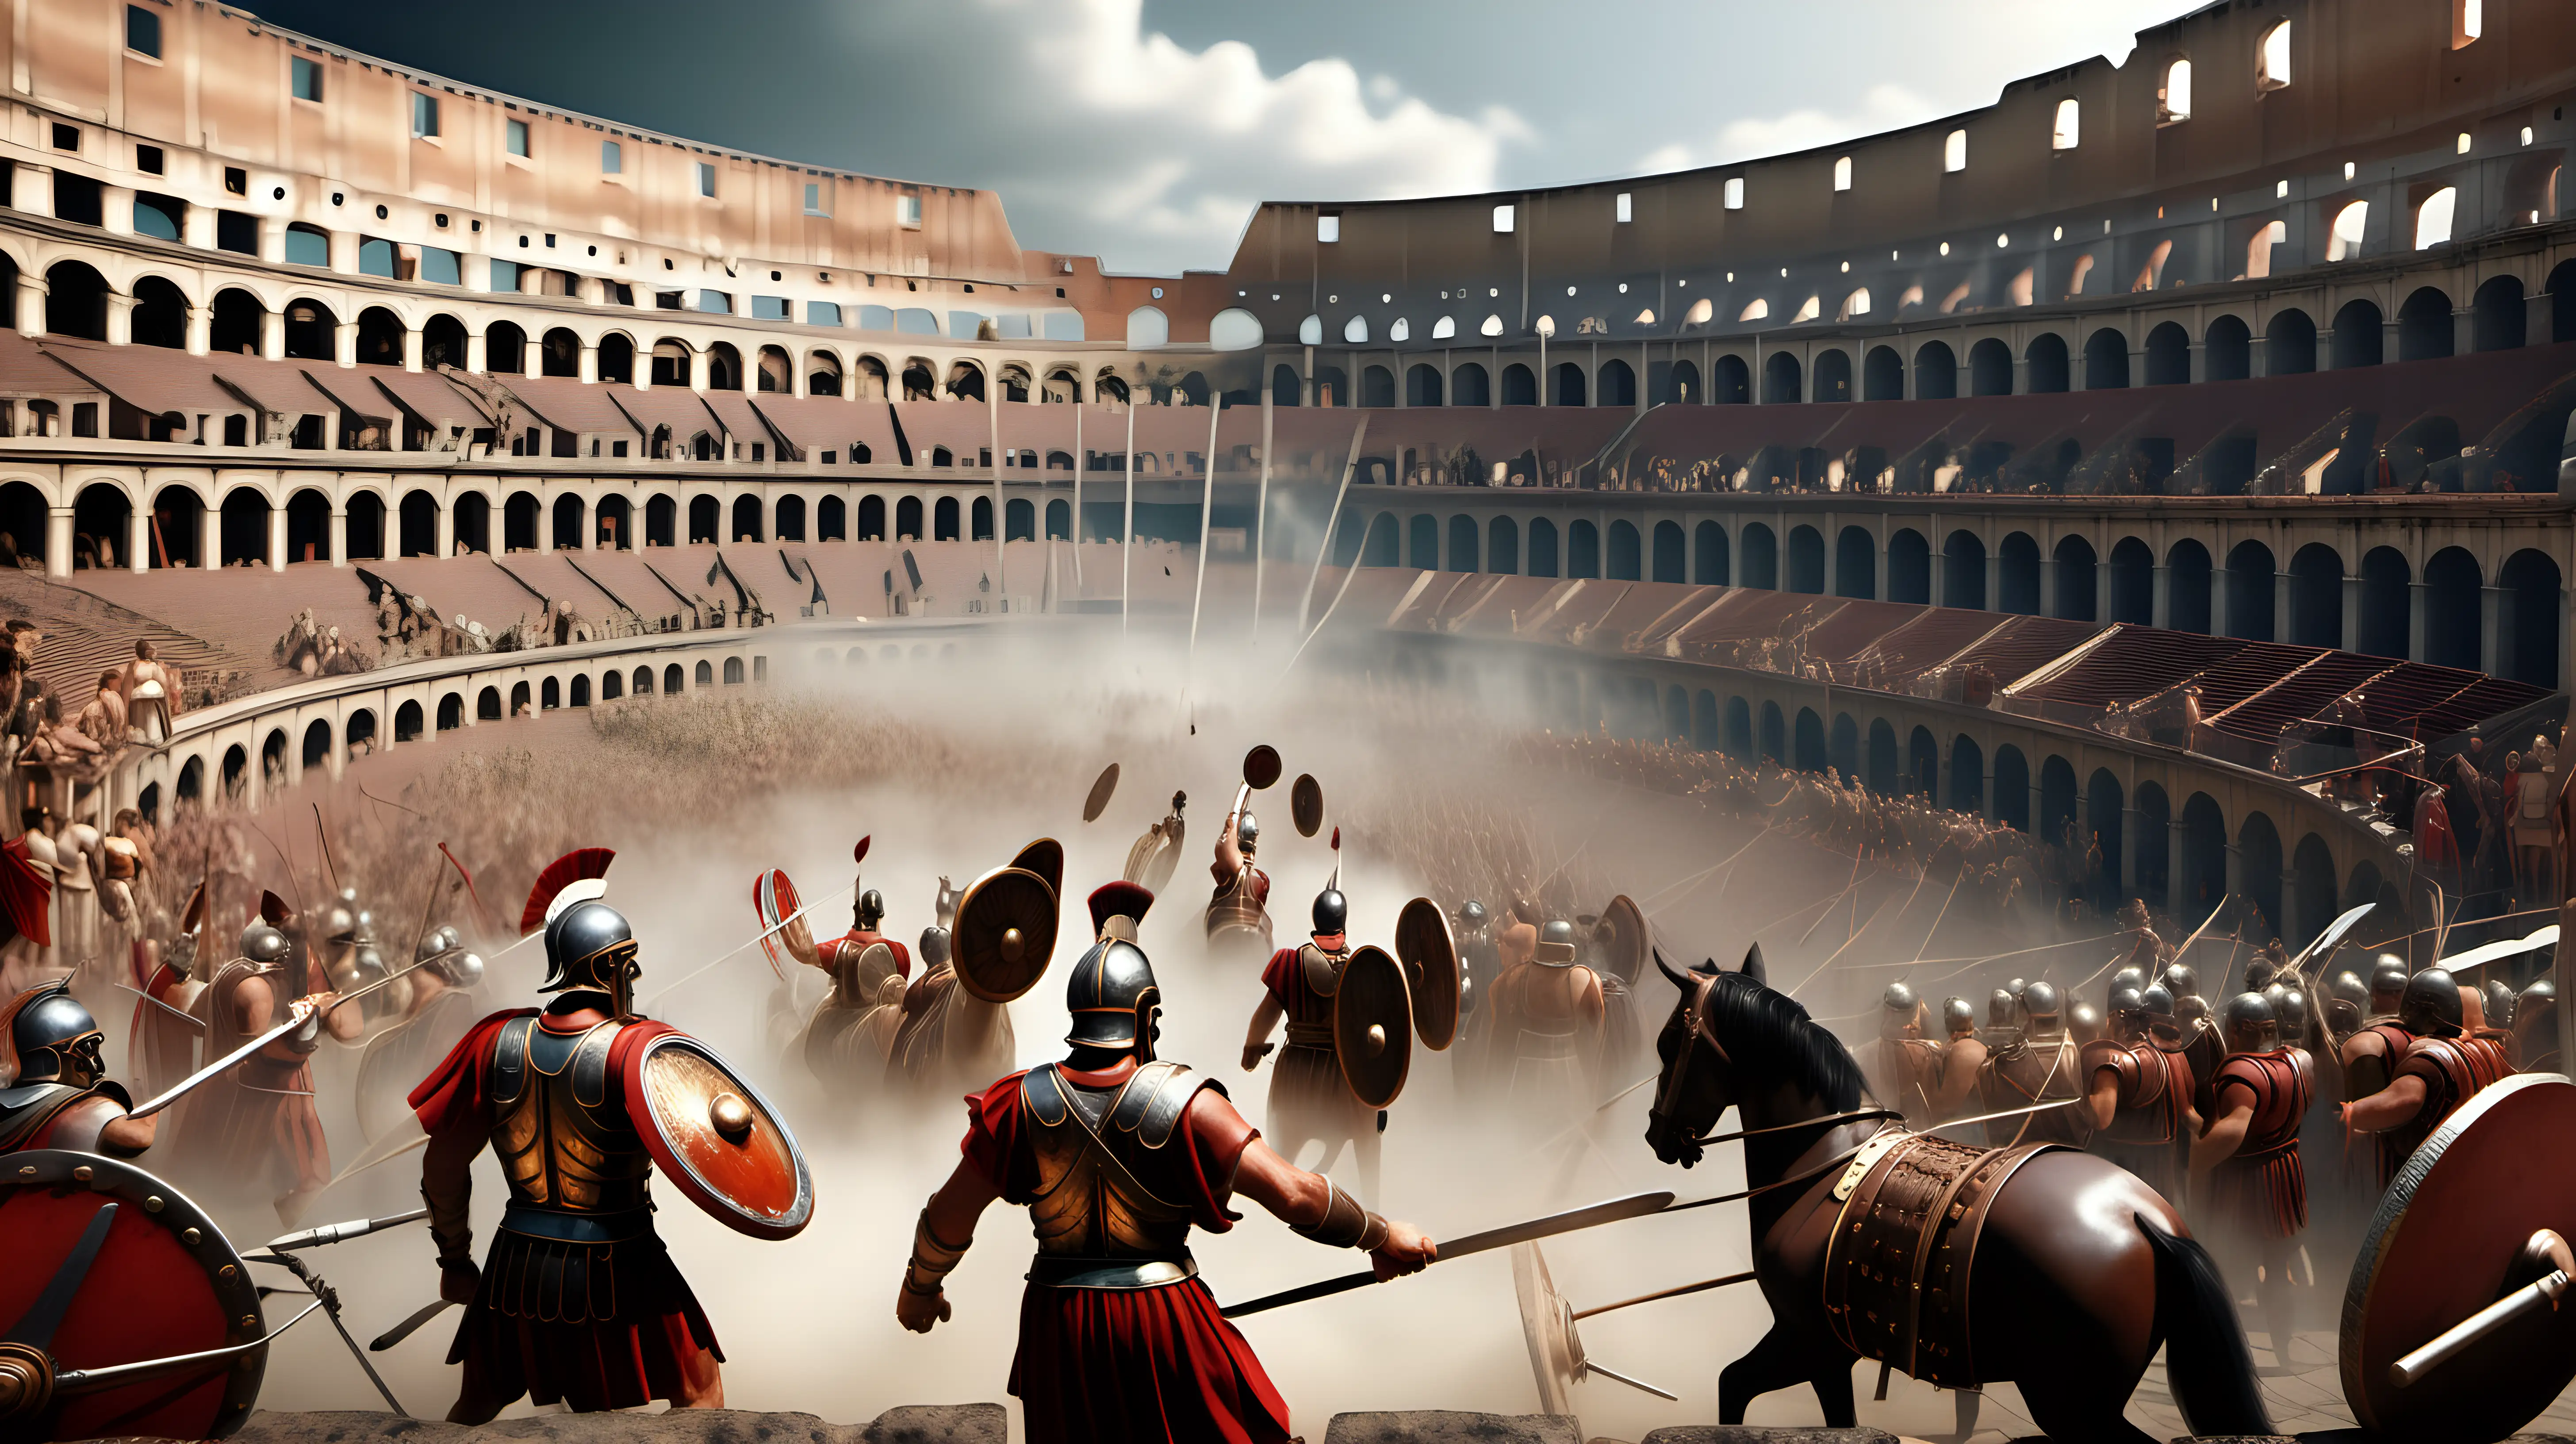 Epic Battle in Ancient Roman Colosseum Gladiators Legionnaires and Chariots Clash